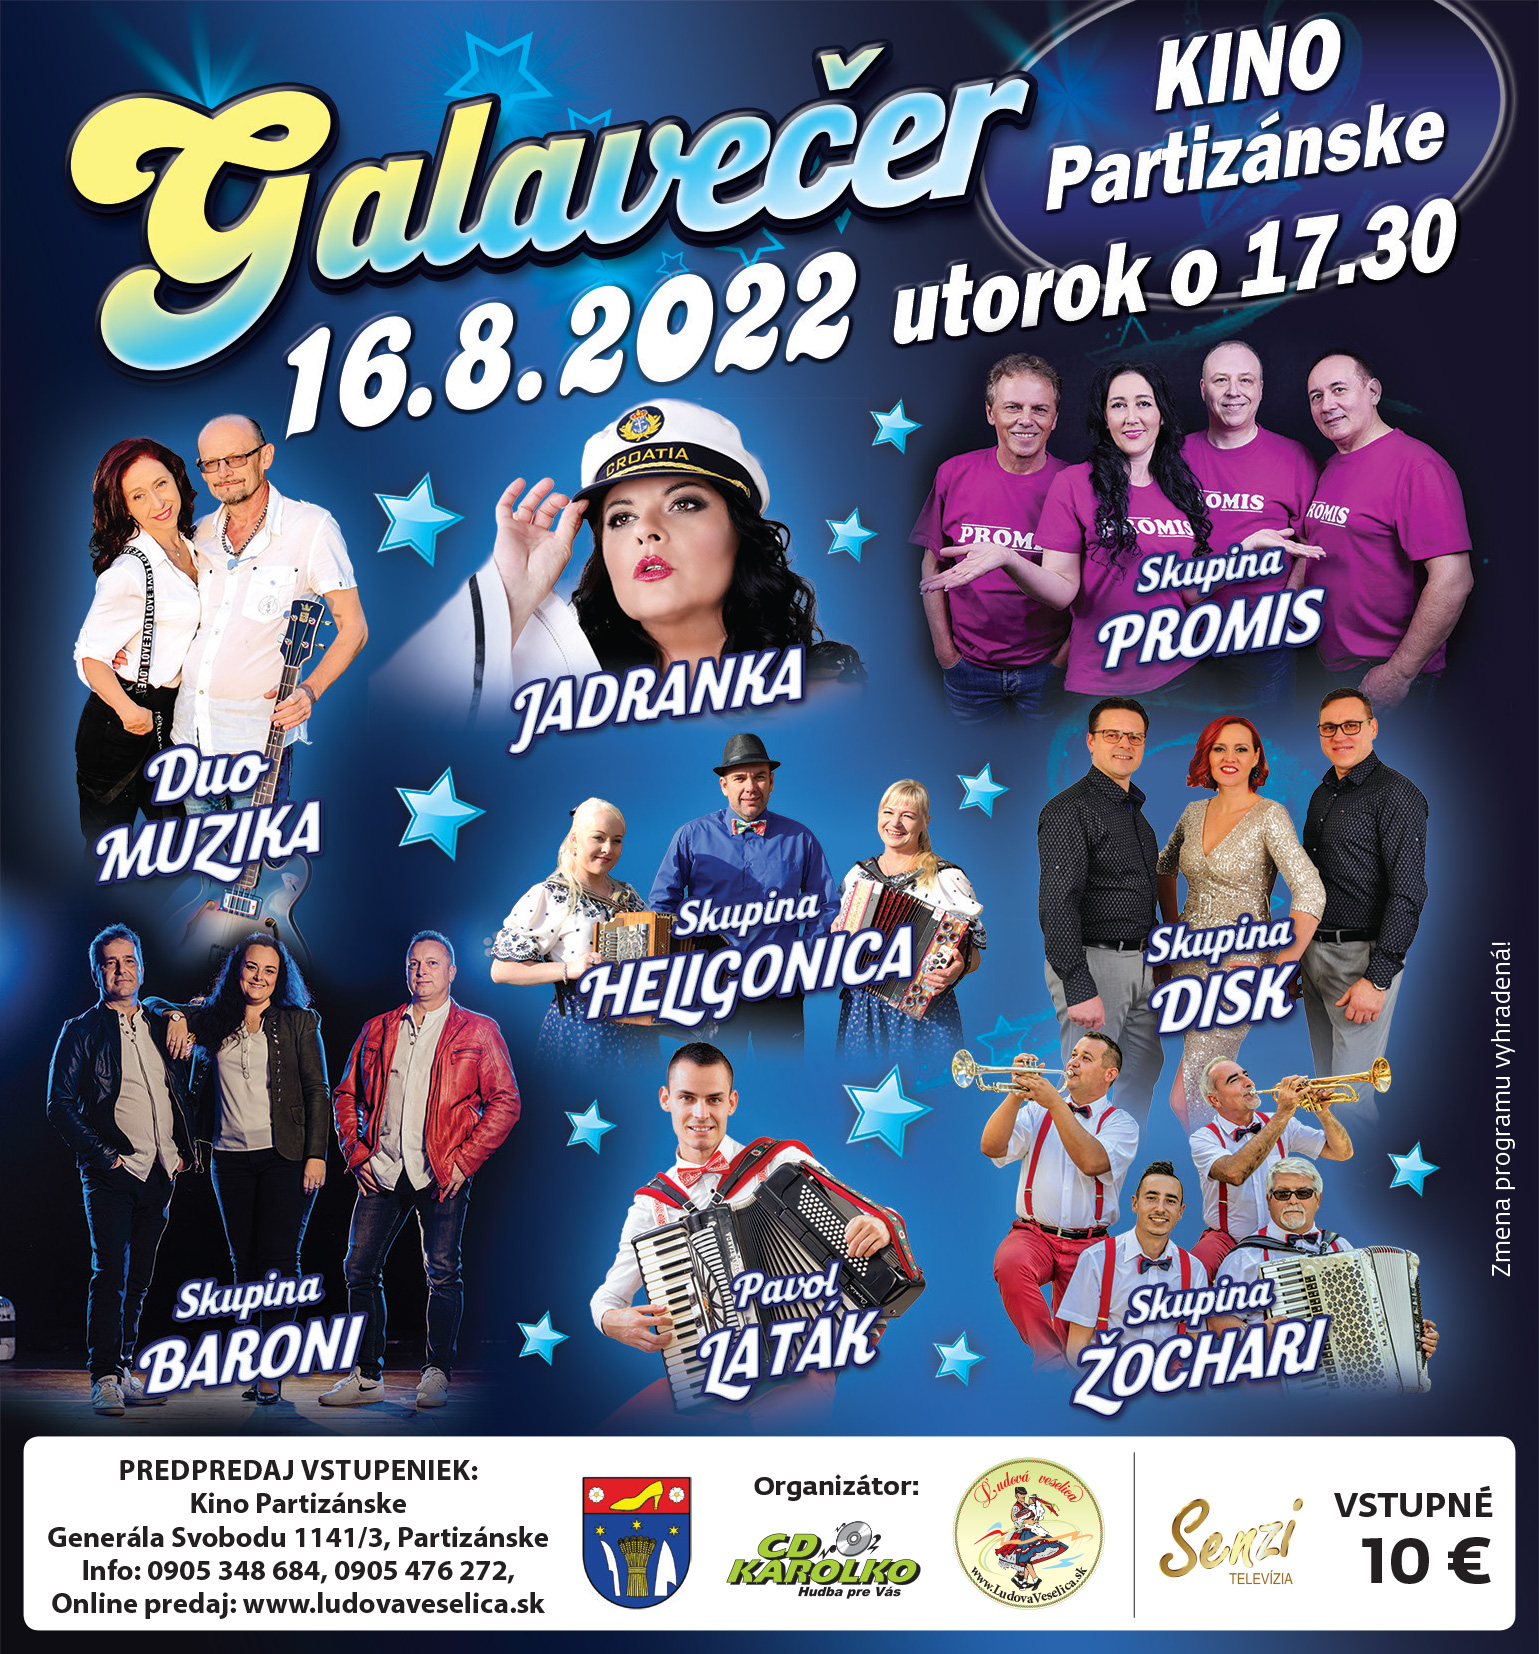 VSTUPENKA - Galavečer 16.8.2022